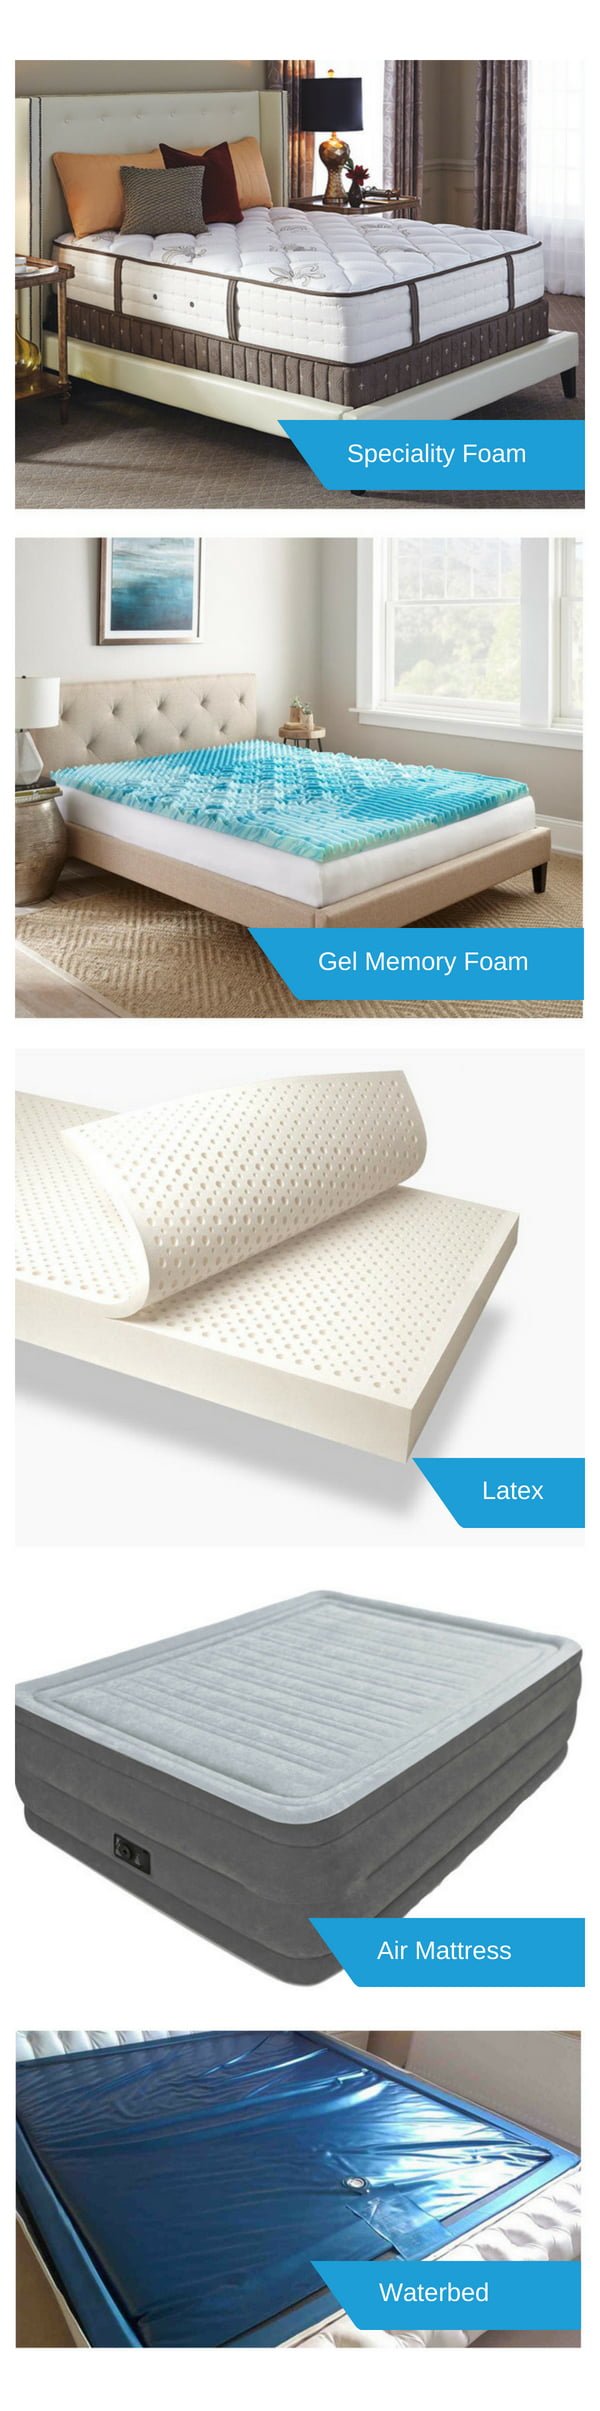 More mattresses